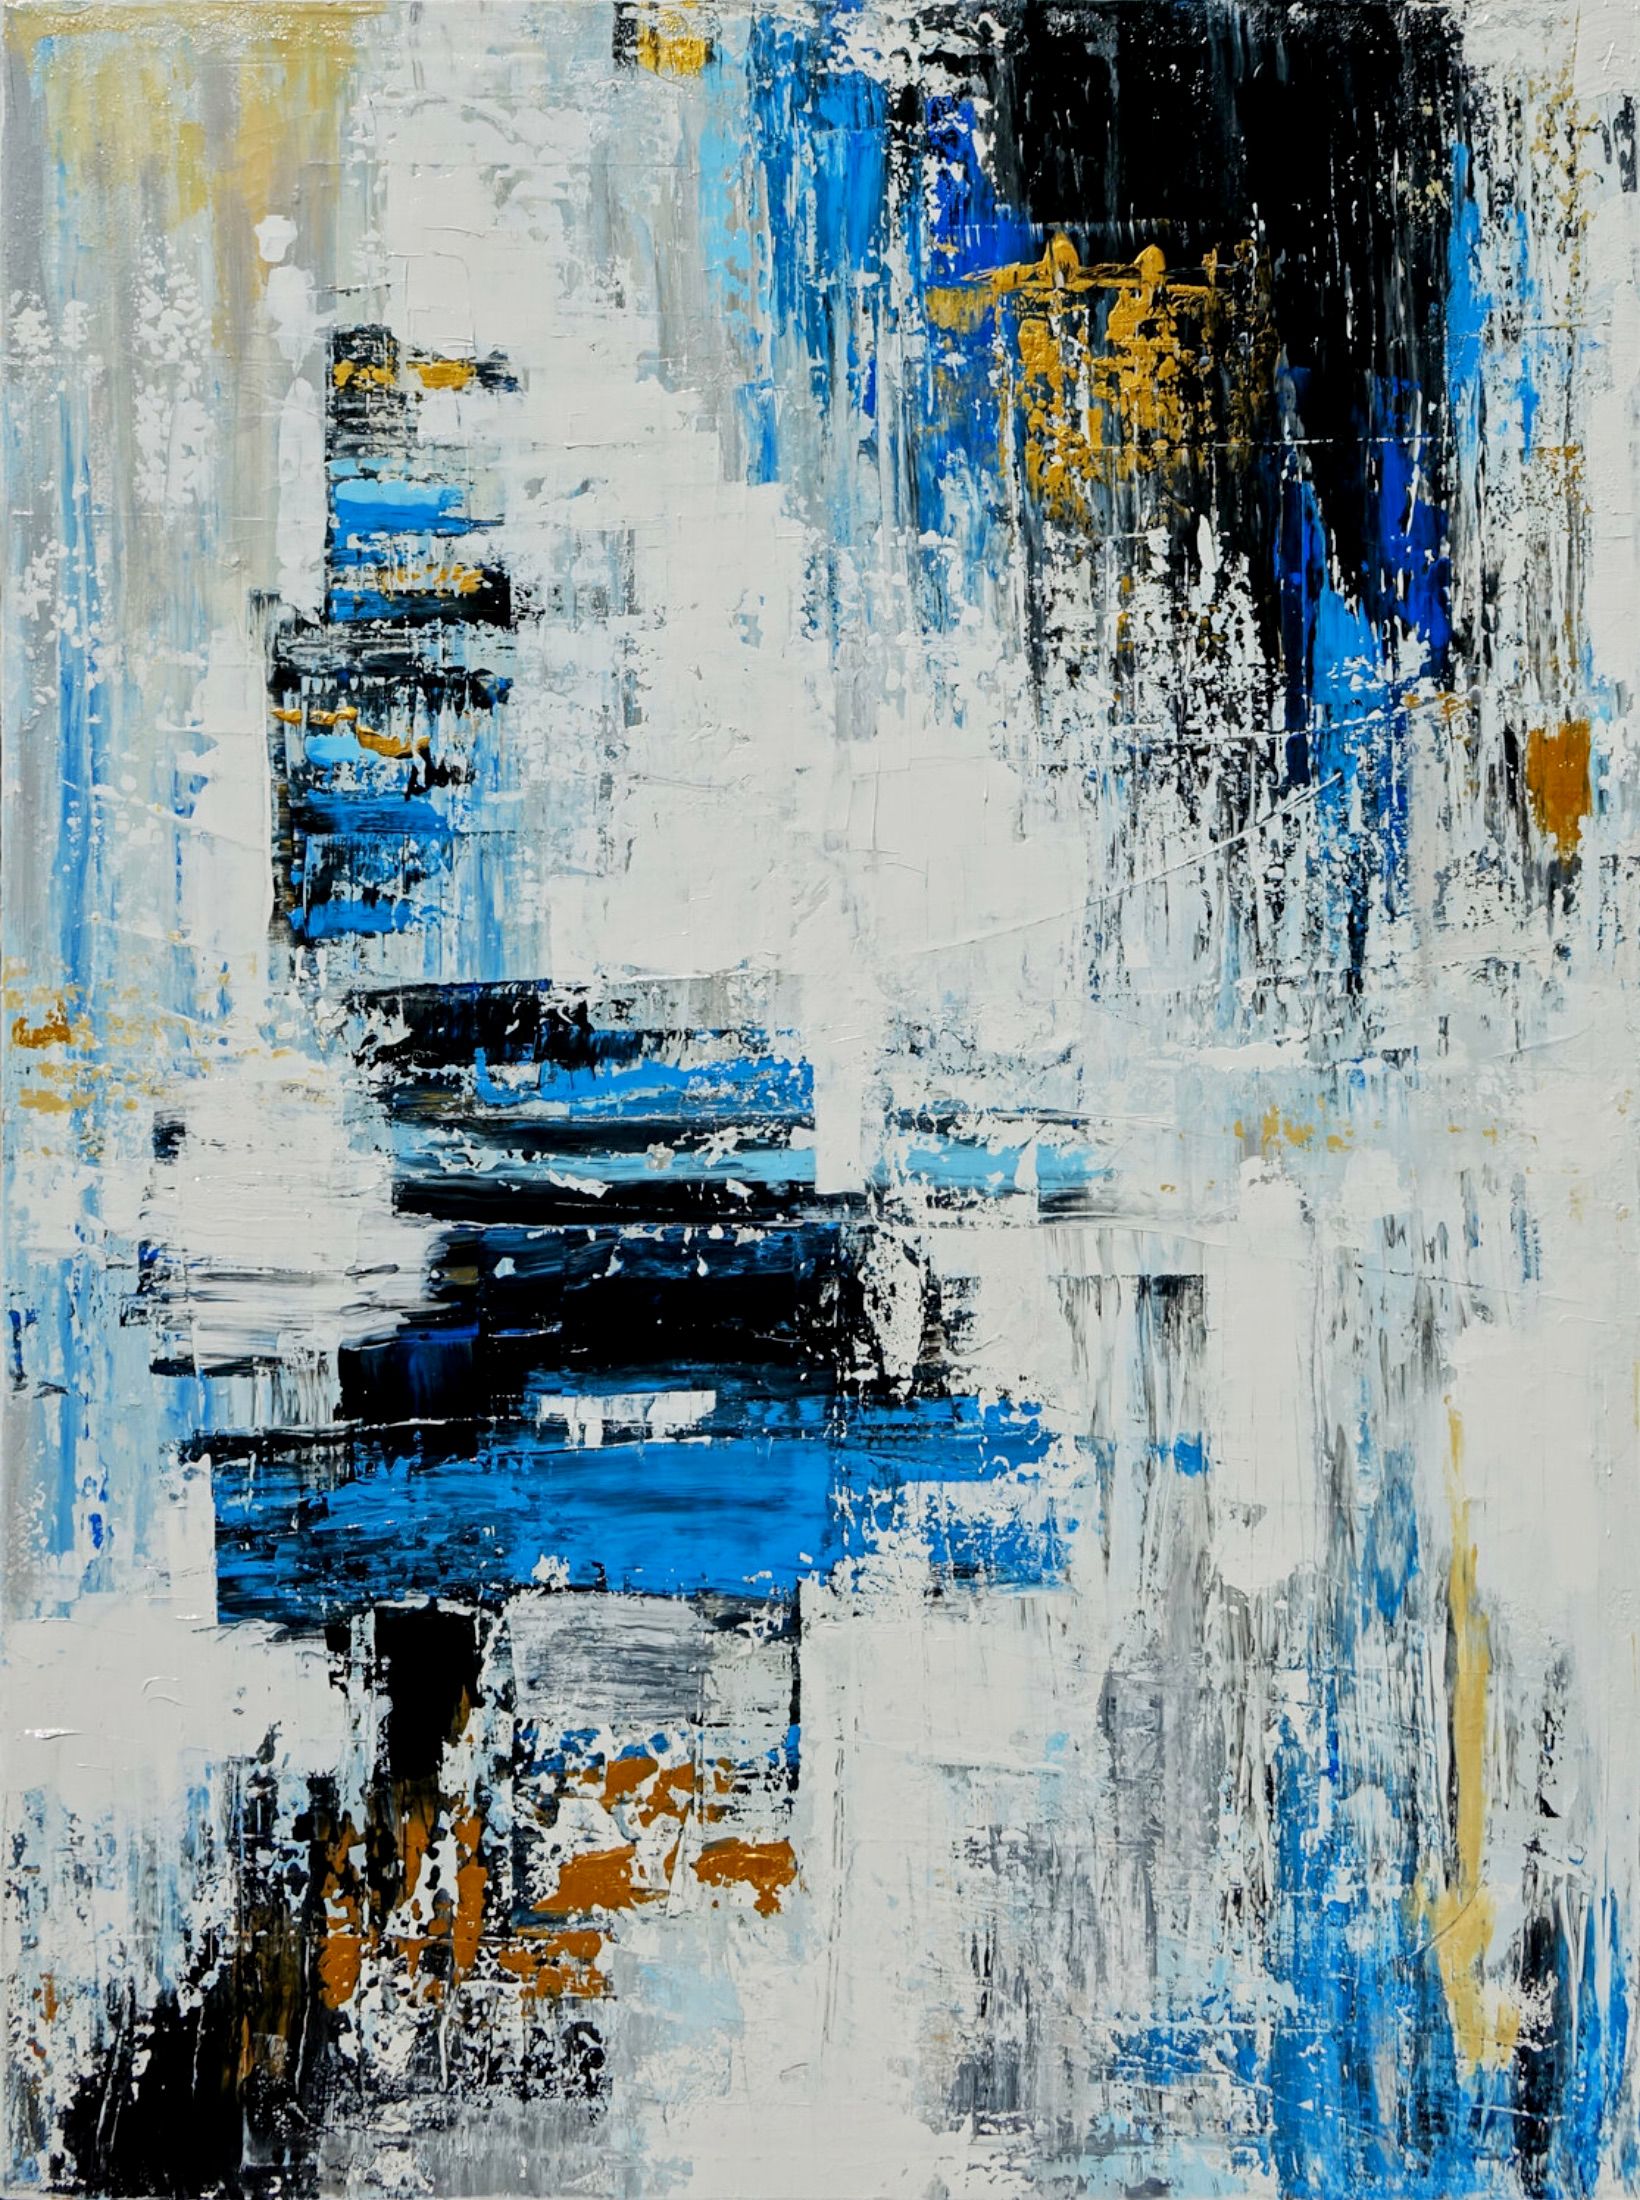 Wojtek Babski, "Blue Abstract", 画布上的抽象画